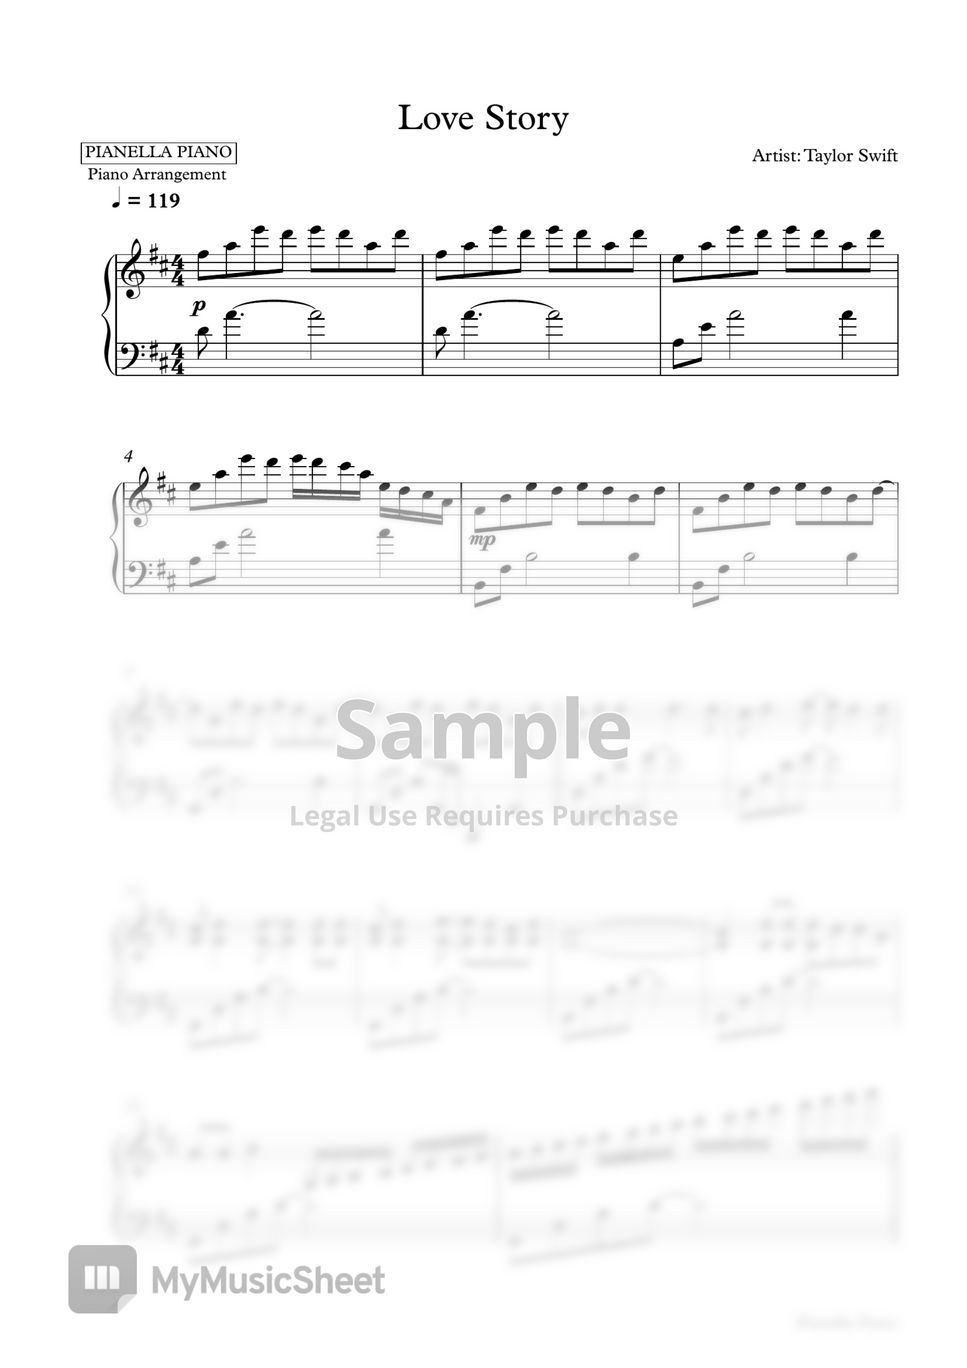 Taylor Swift - Love Story (Piano Sheet) by Pianella Piano